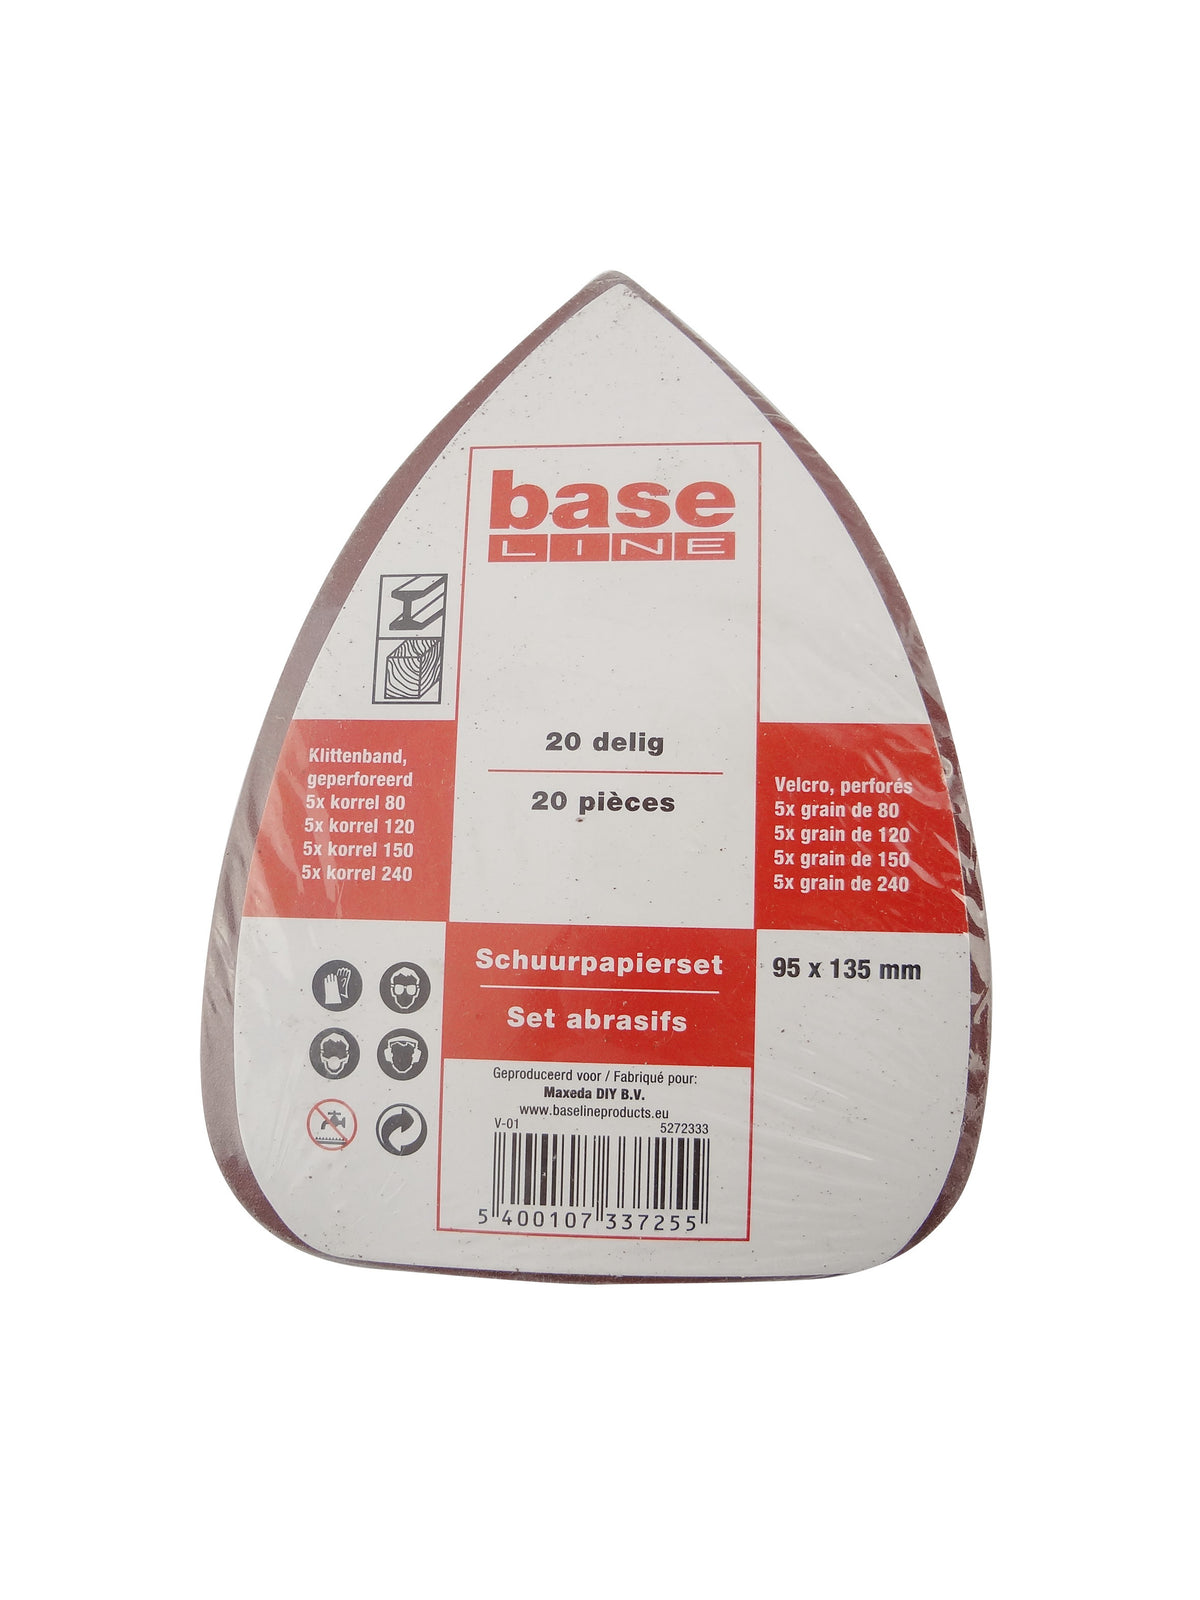 Baseline schuurpapierpack mouse 20stuks